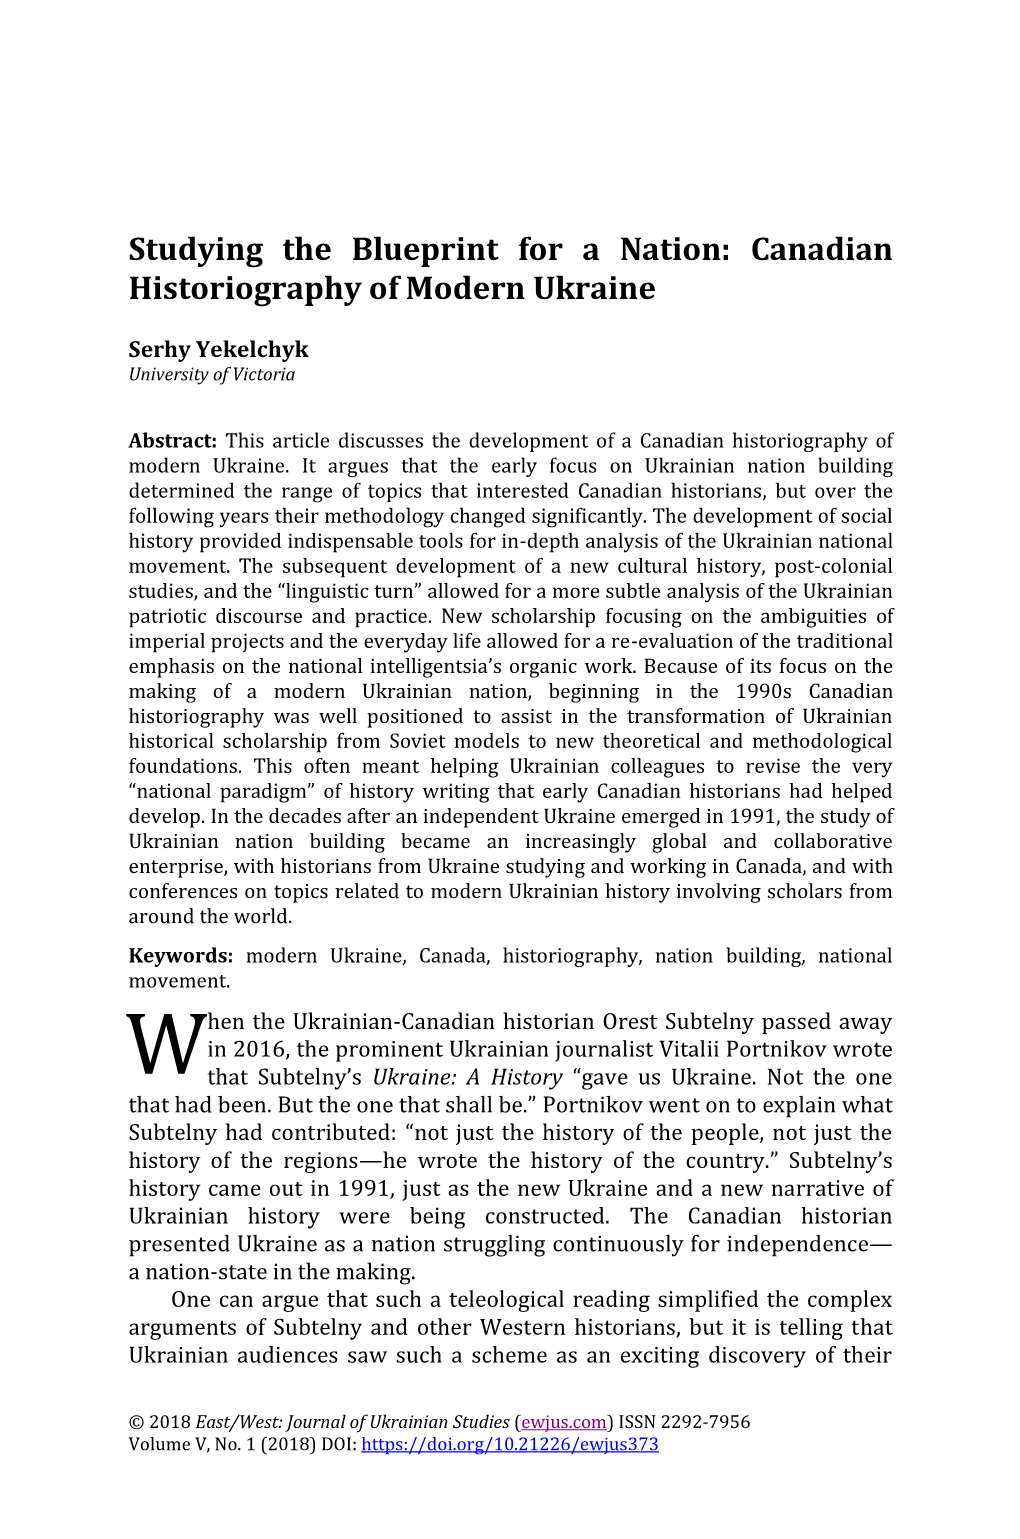 Canadian Historiography of Modern Ukraine, EWJUS, Vol. 5, No. 1, 2018